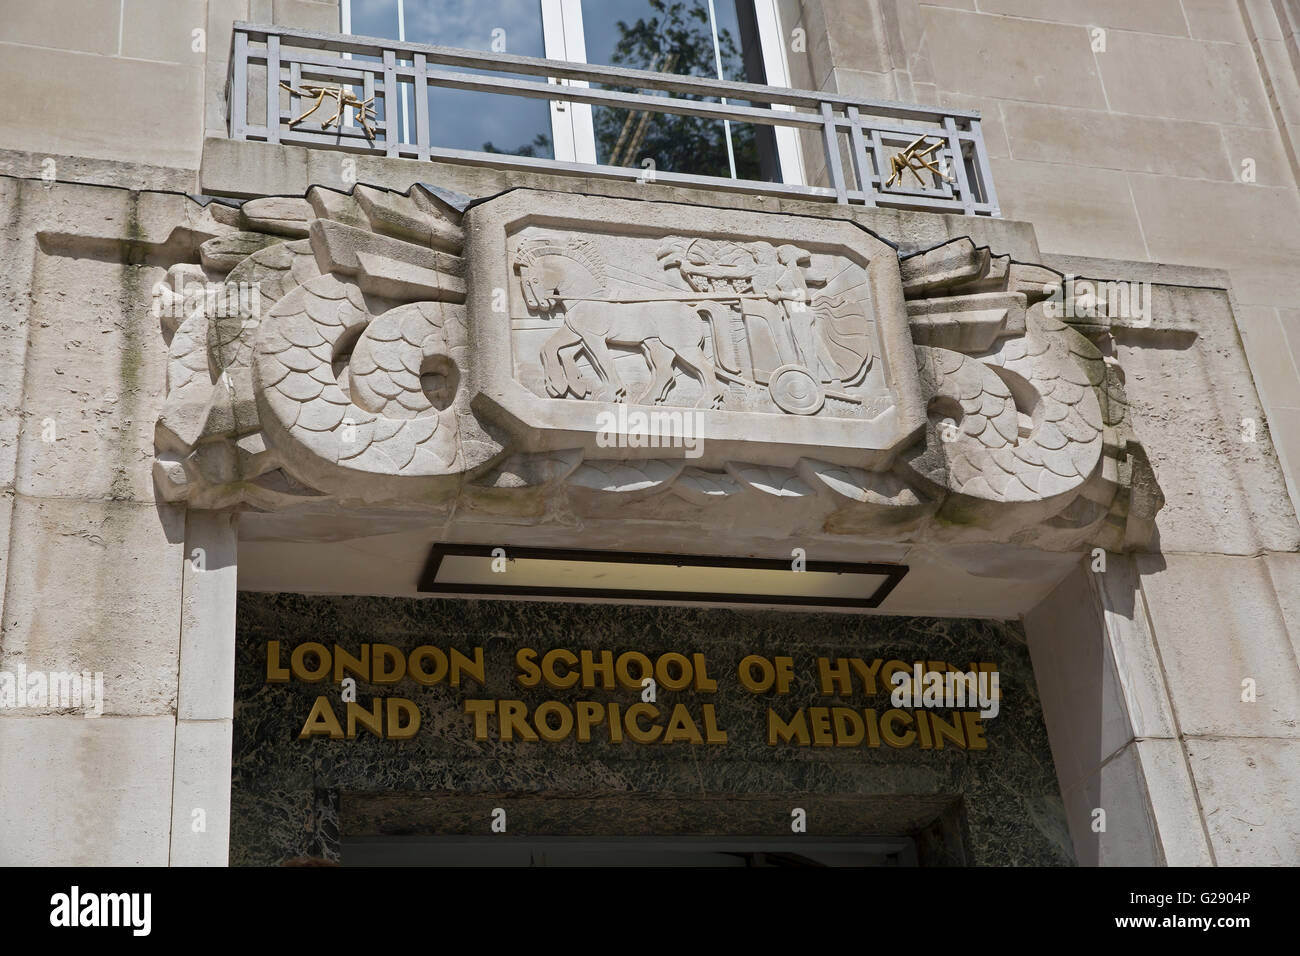 London School of Hygiene and Tropical Medicine Stock Photo